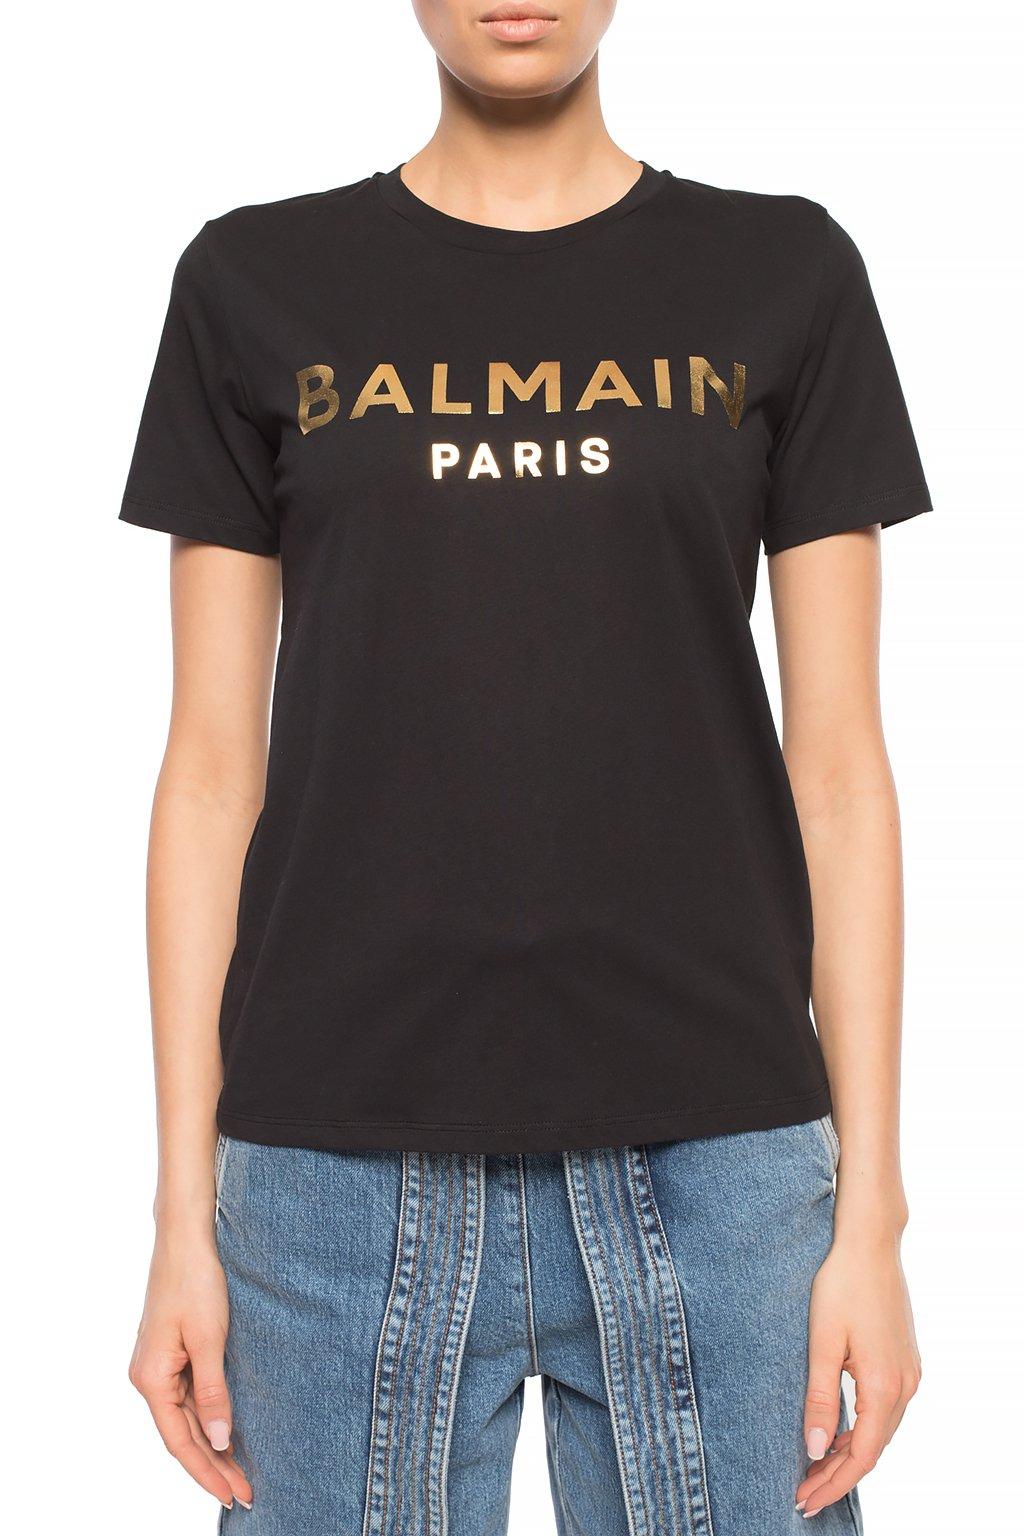 Balmain Cotton T-shirt With Logo in Black - Lyst